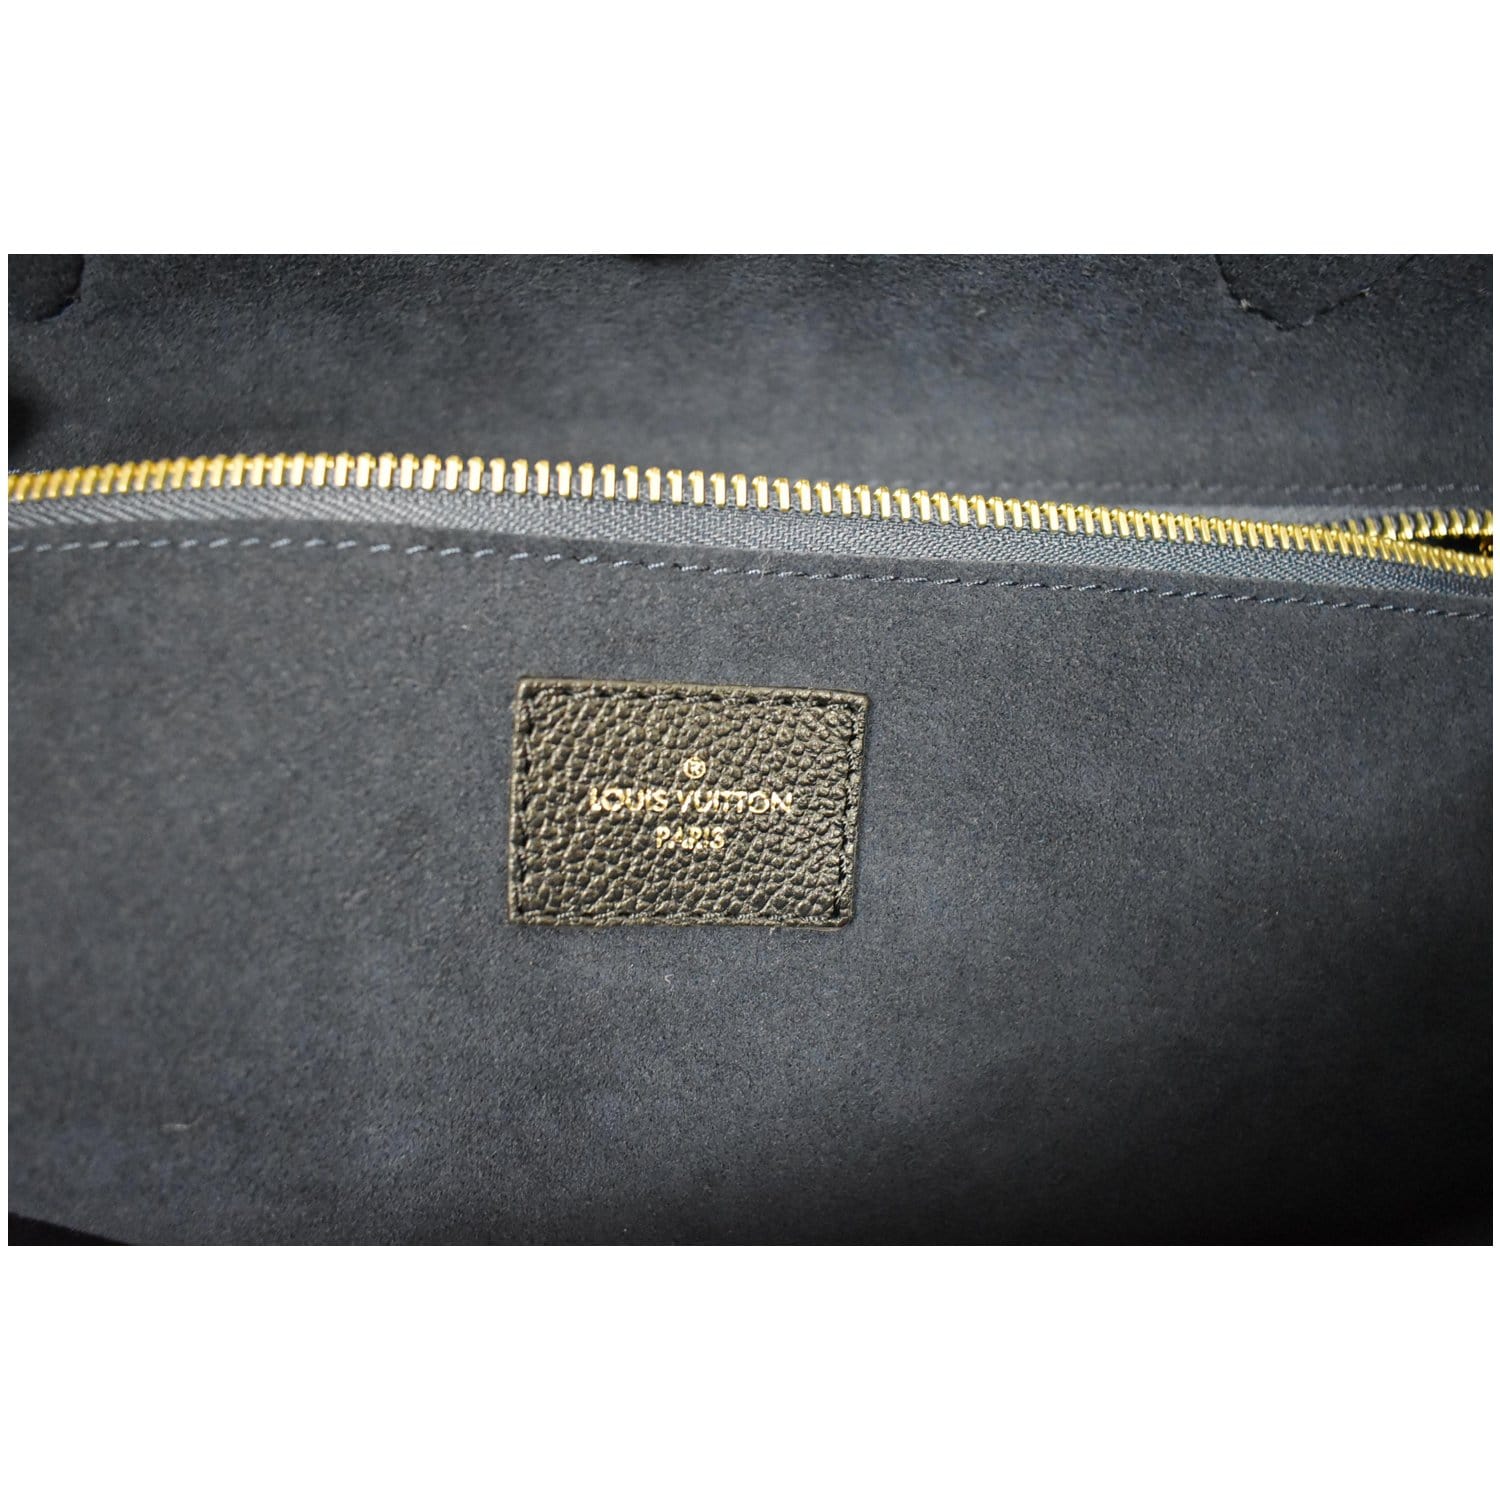 LOUIS VUITTON MM NEVERFULL BLACK – OC Luxury Bags